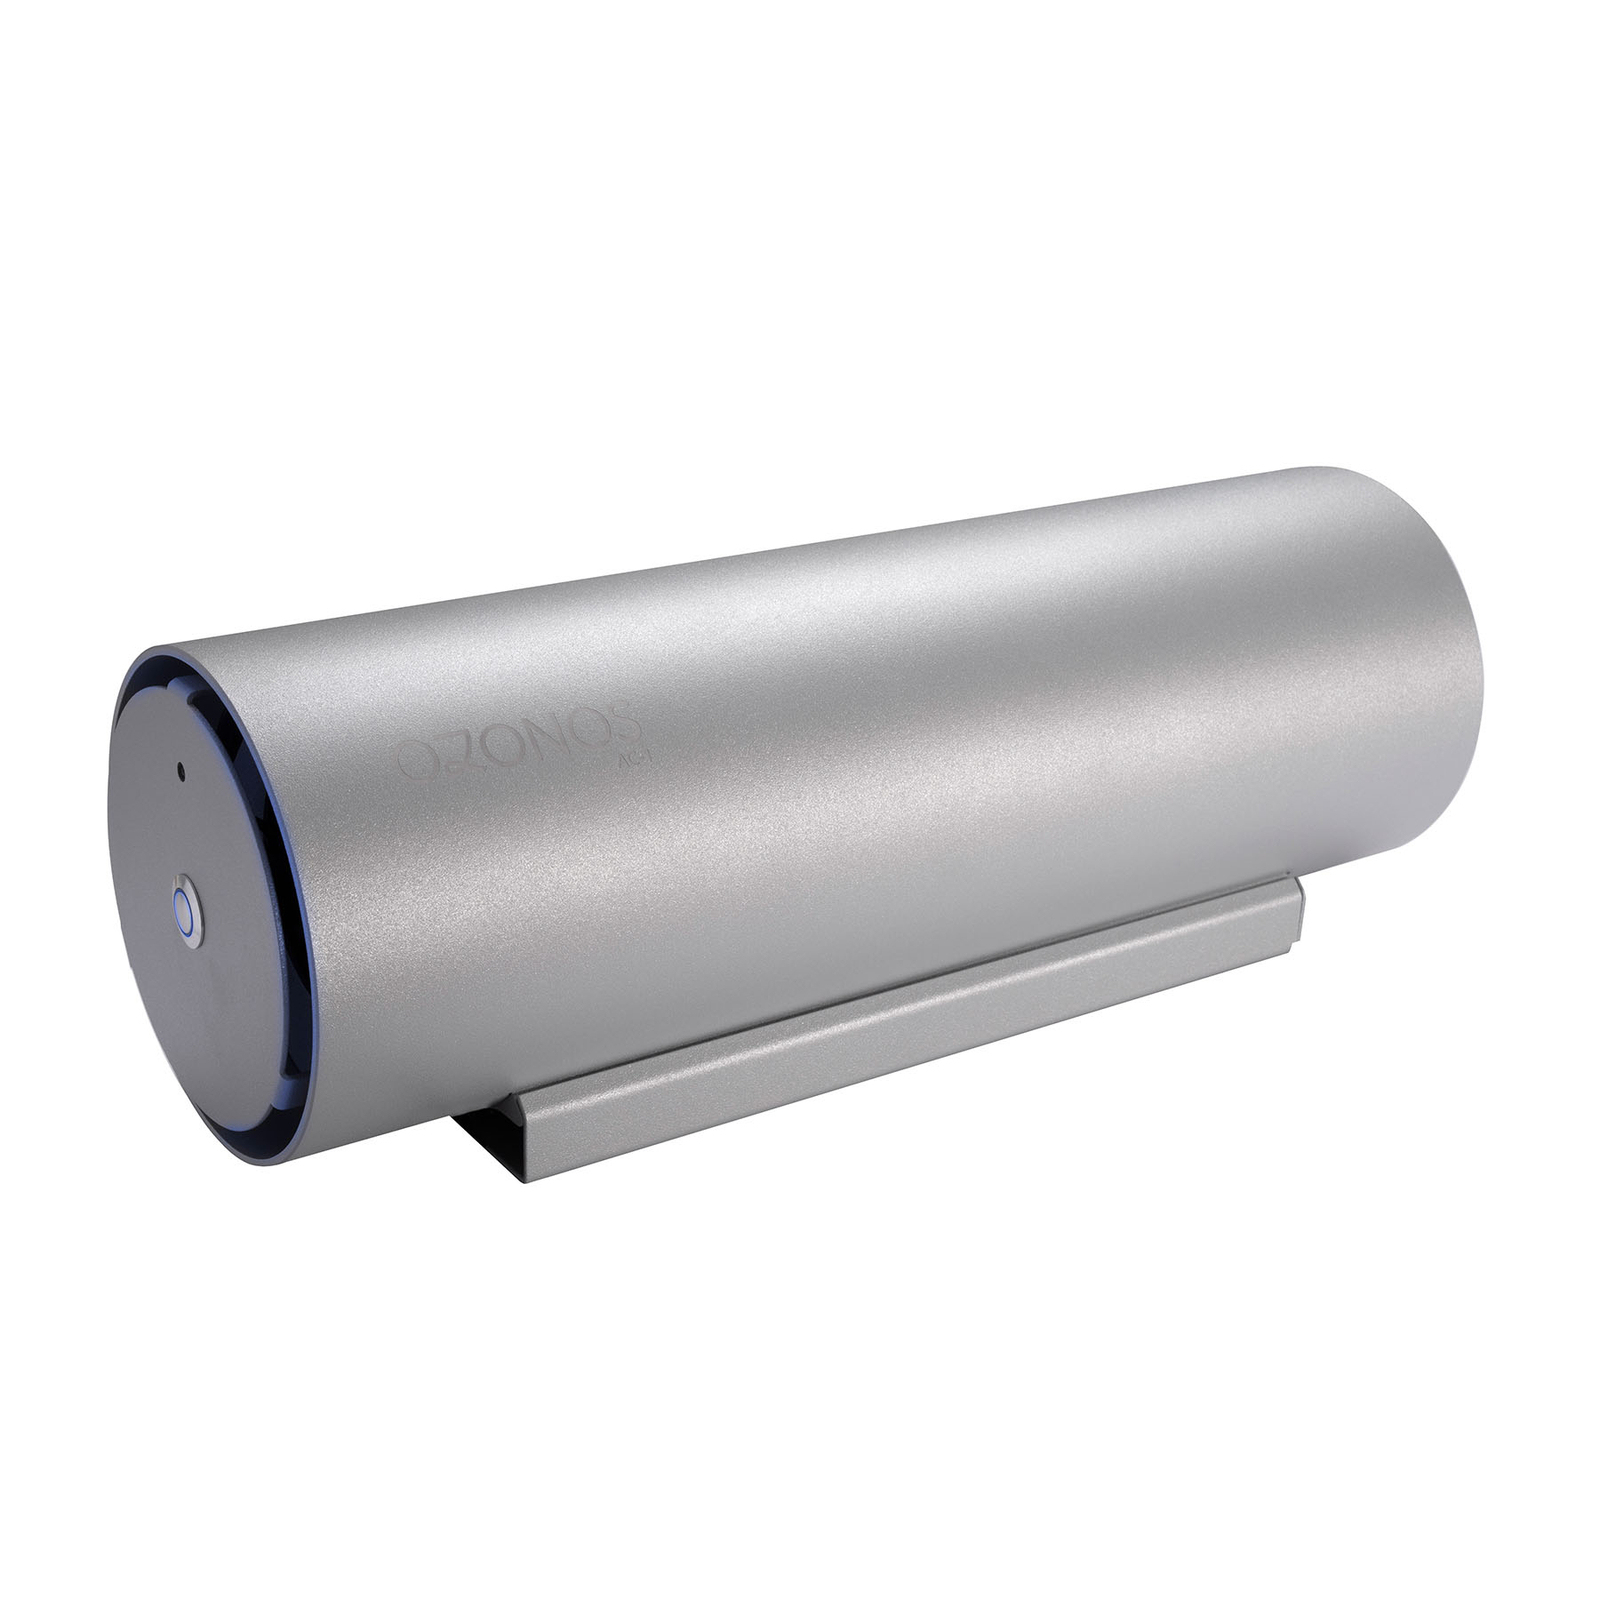 Ozonos AC-1 Pro air purifier, 0.210 ppm O3, silver